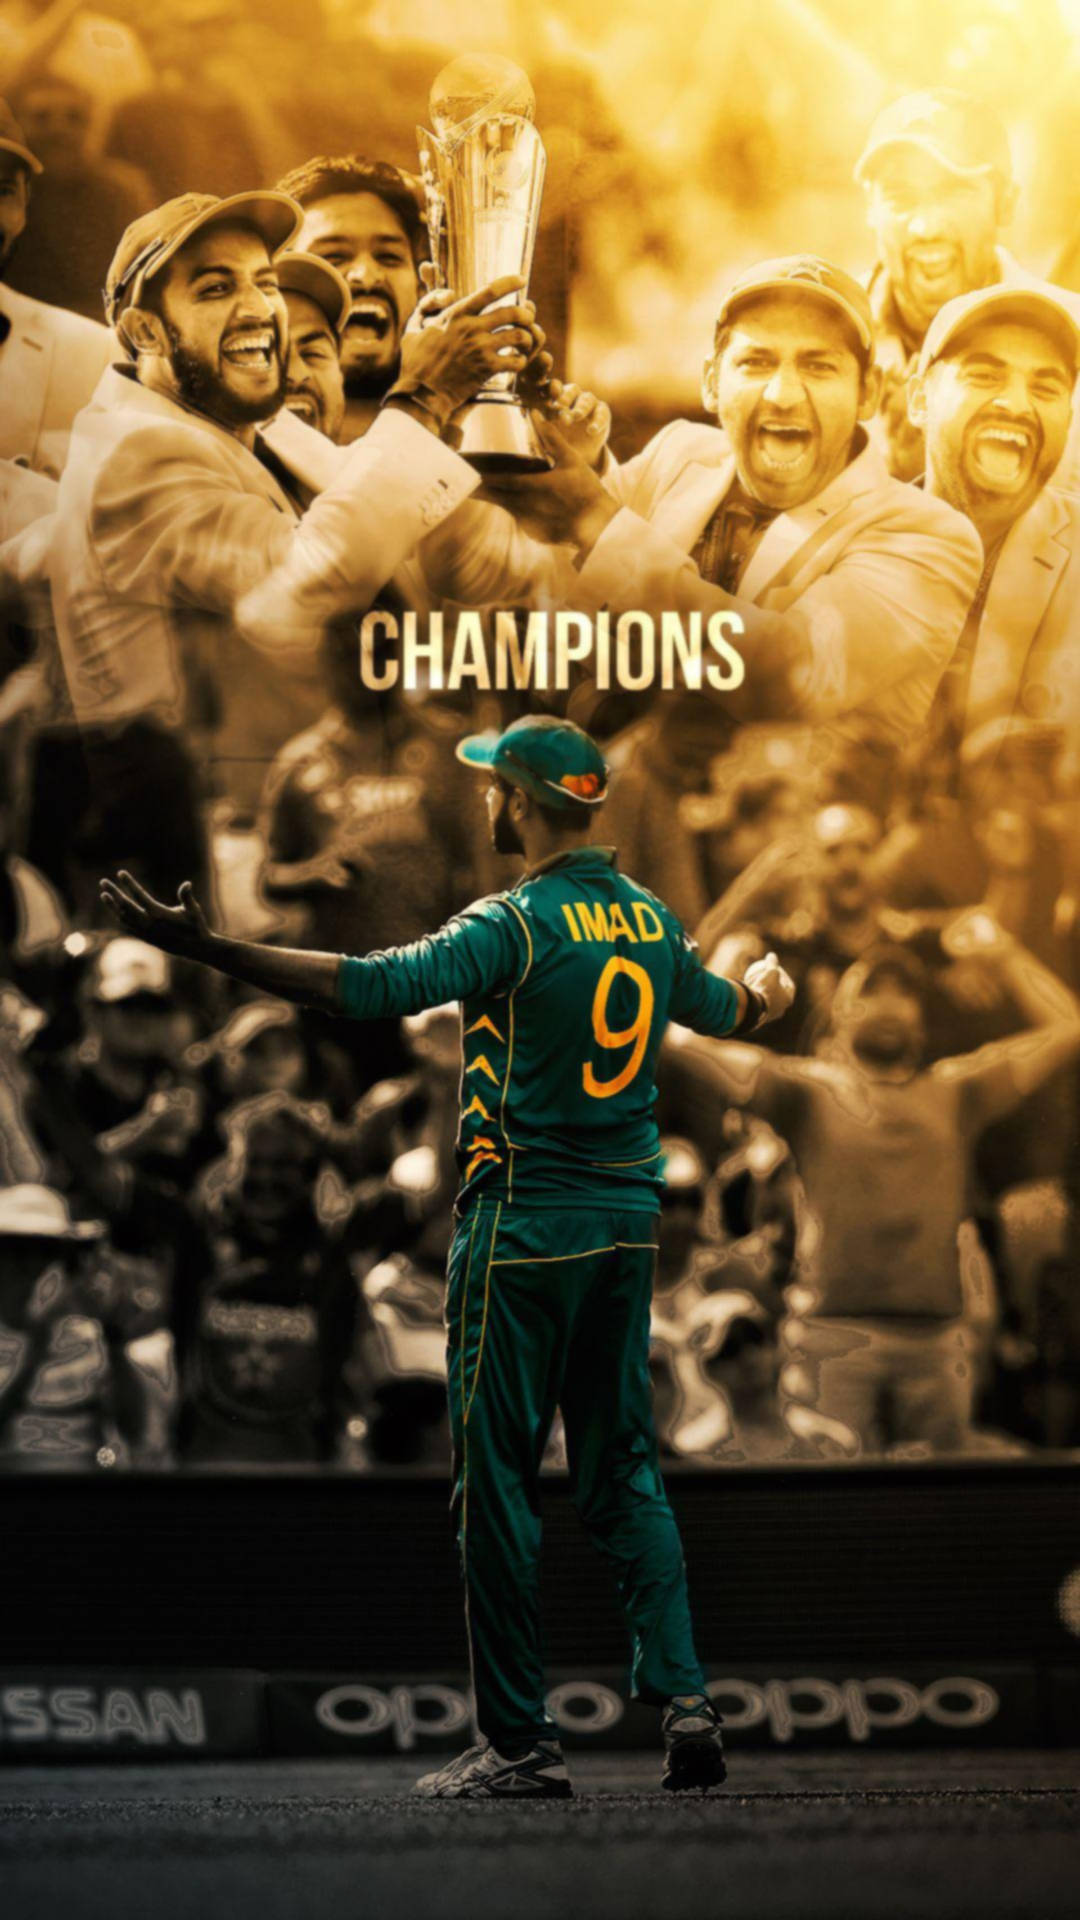 Pakistancricket 2017 Icc Champions: Pakistanischer Cricket-weltmeister 2017 Wallpaper